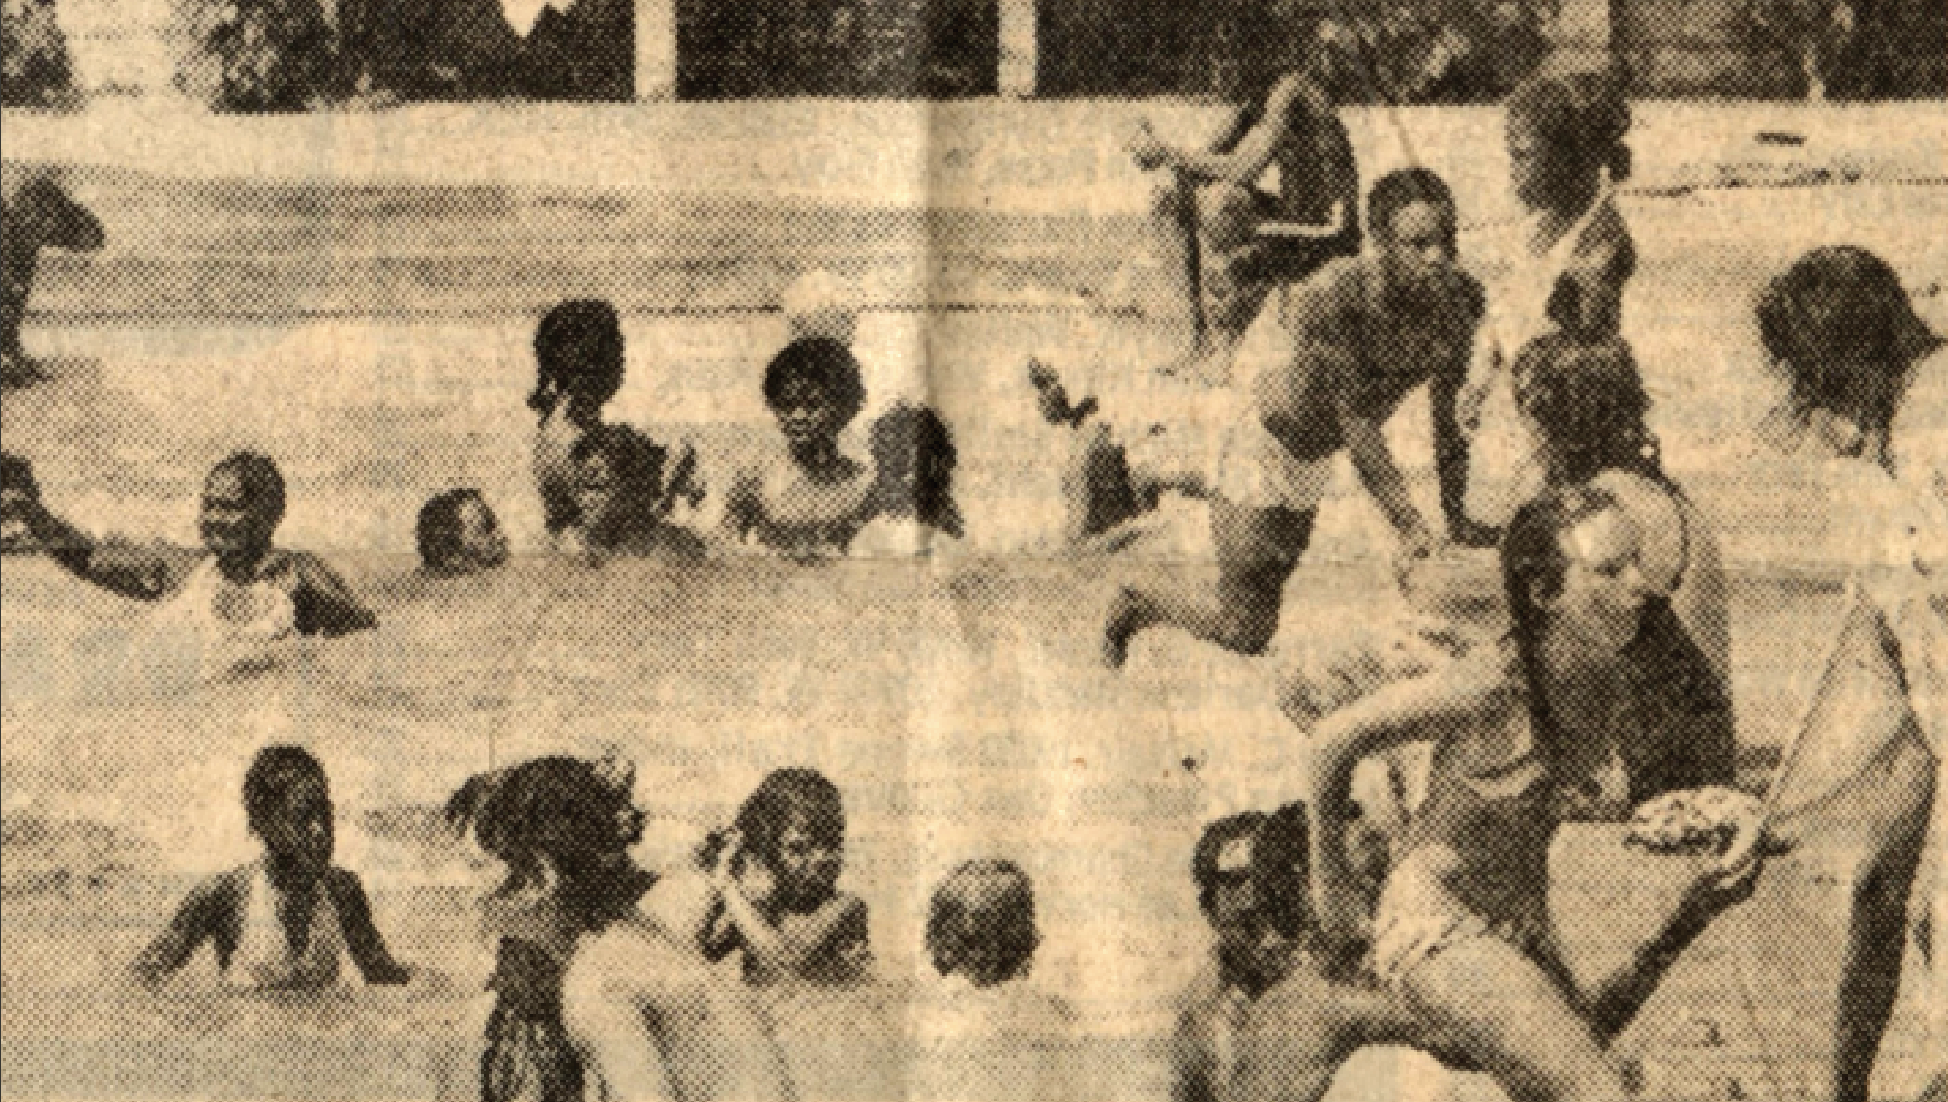 Kids swimming in a public pool